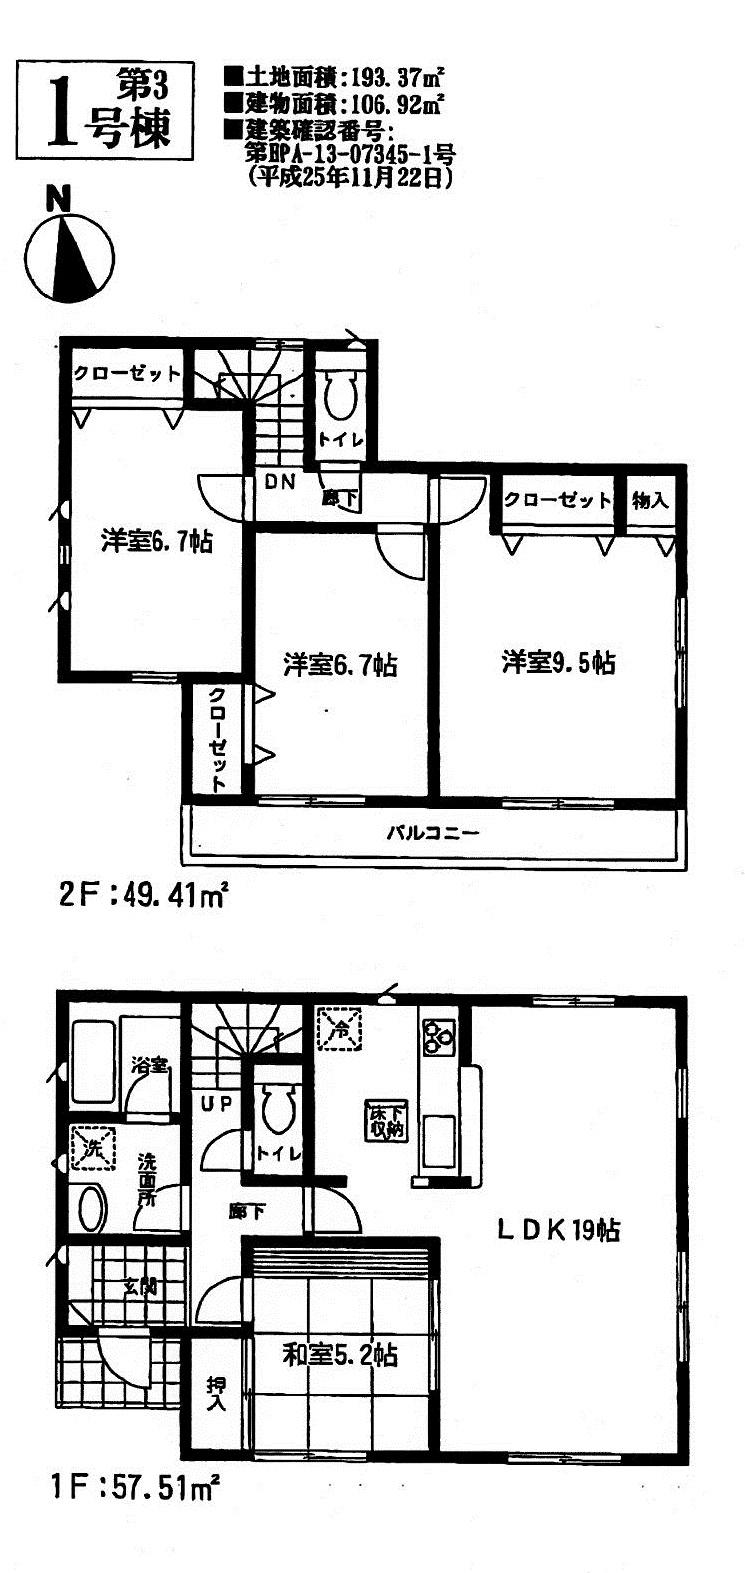 Floor plan. (1 Building), Price 22,800,000 yen, 4LDK, Land area 193.37 sq m , Building area 106.92 sq m